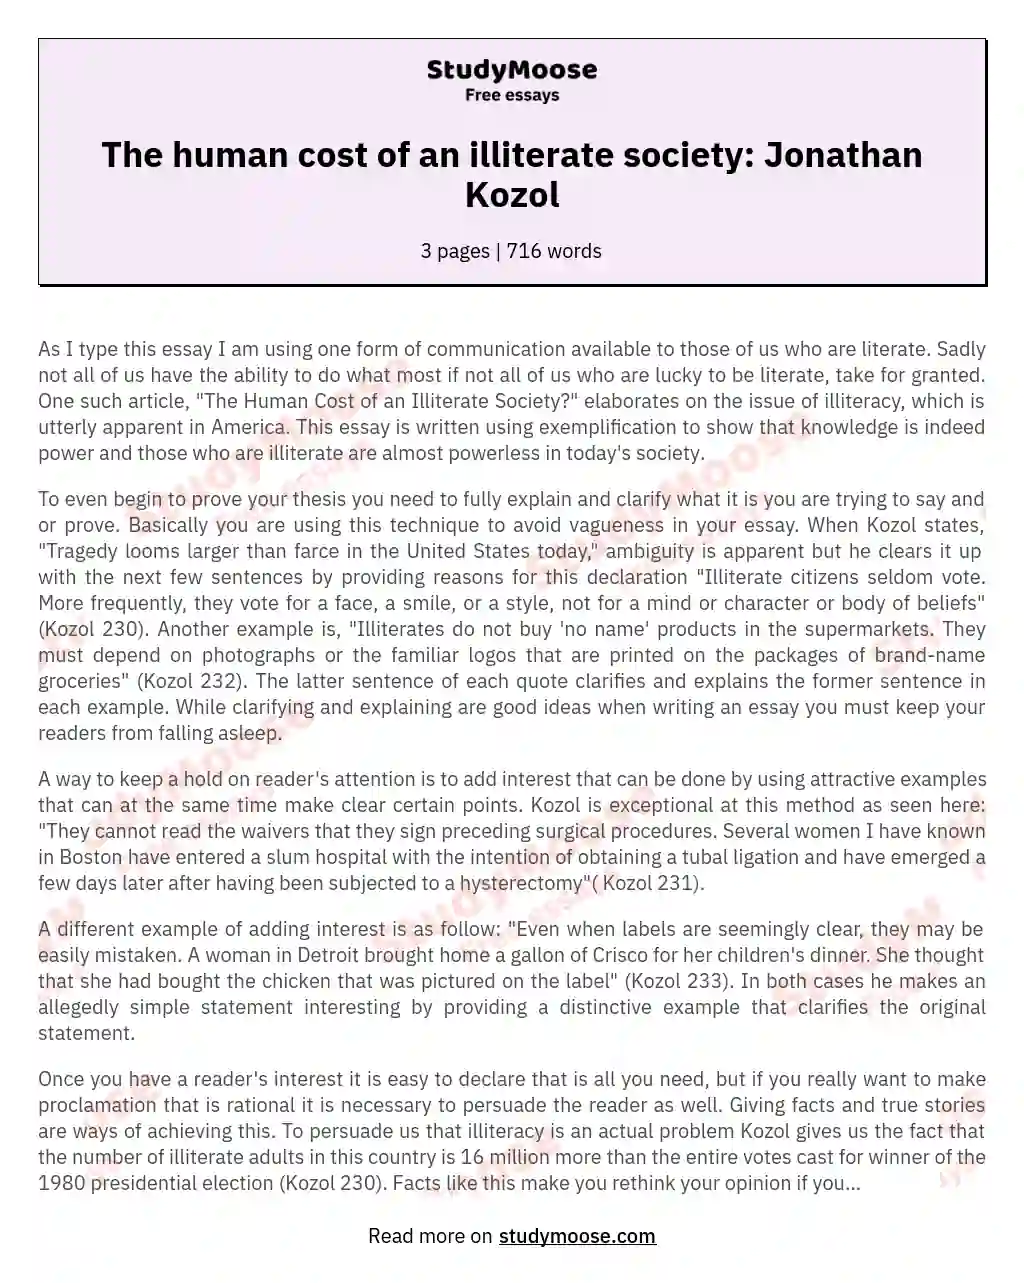 The human cost of an illiterate society: Jonathan Kozol essay